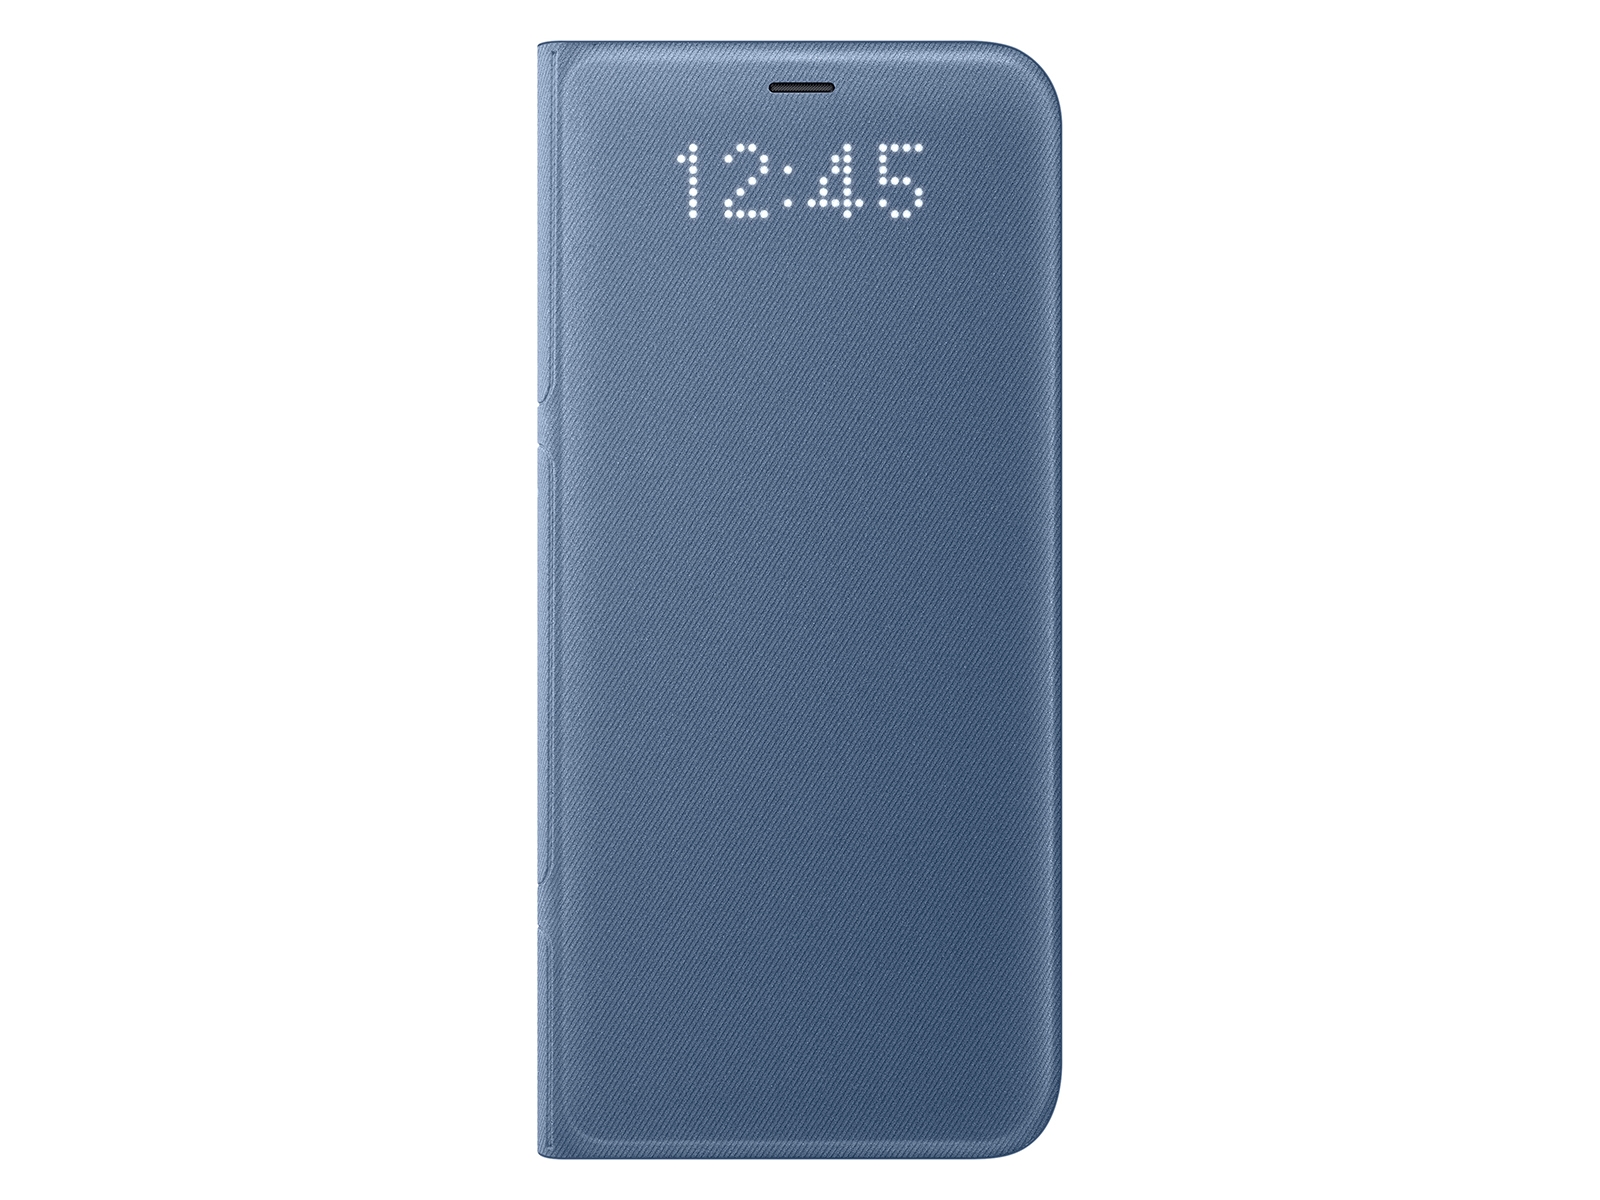 SUPREME LOUIS VUITTON BLUE Samsung Galaxy S8 Case Cover